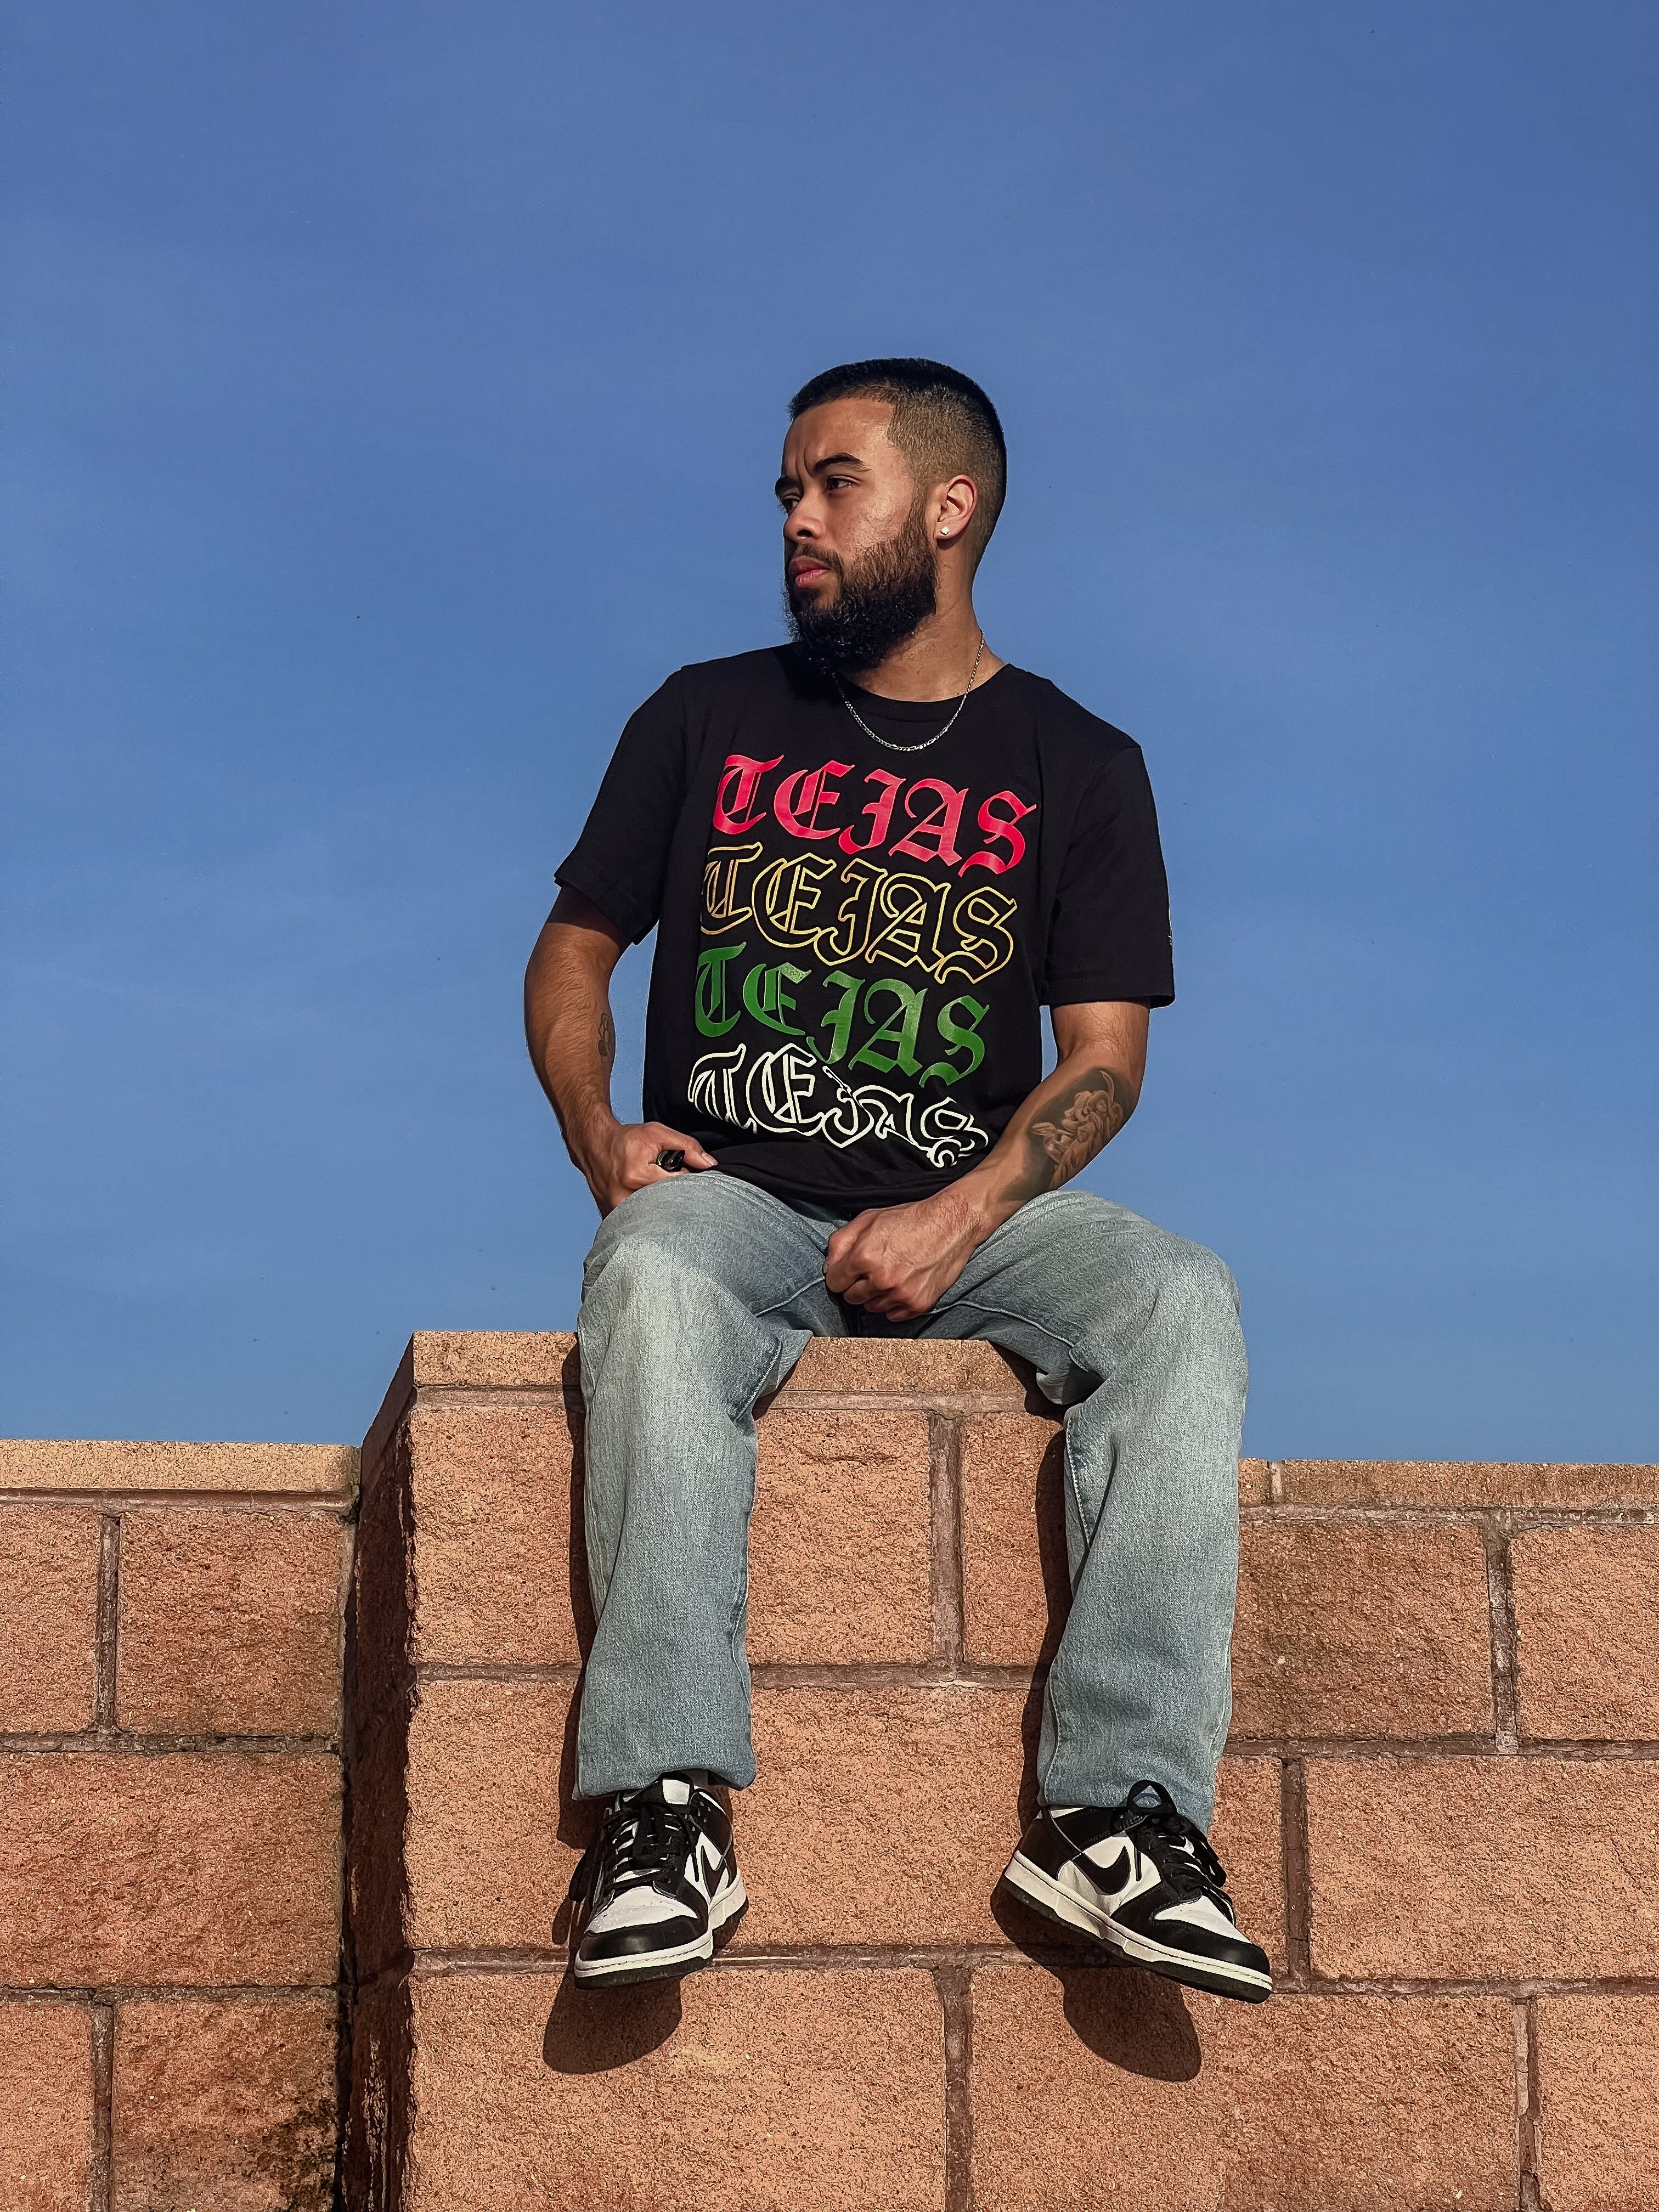 I Viva Tejas Shirt Hispanic Culture, Texas Rangers - Ellie Shirt